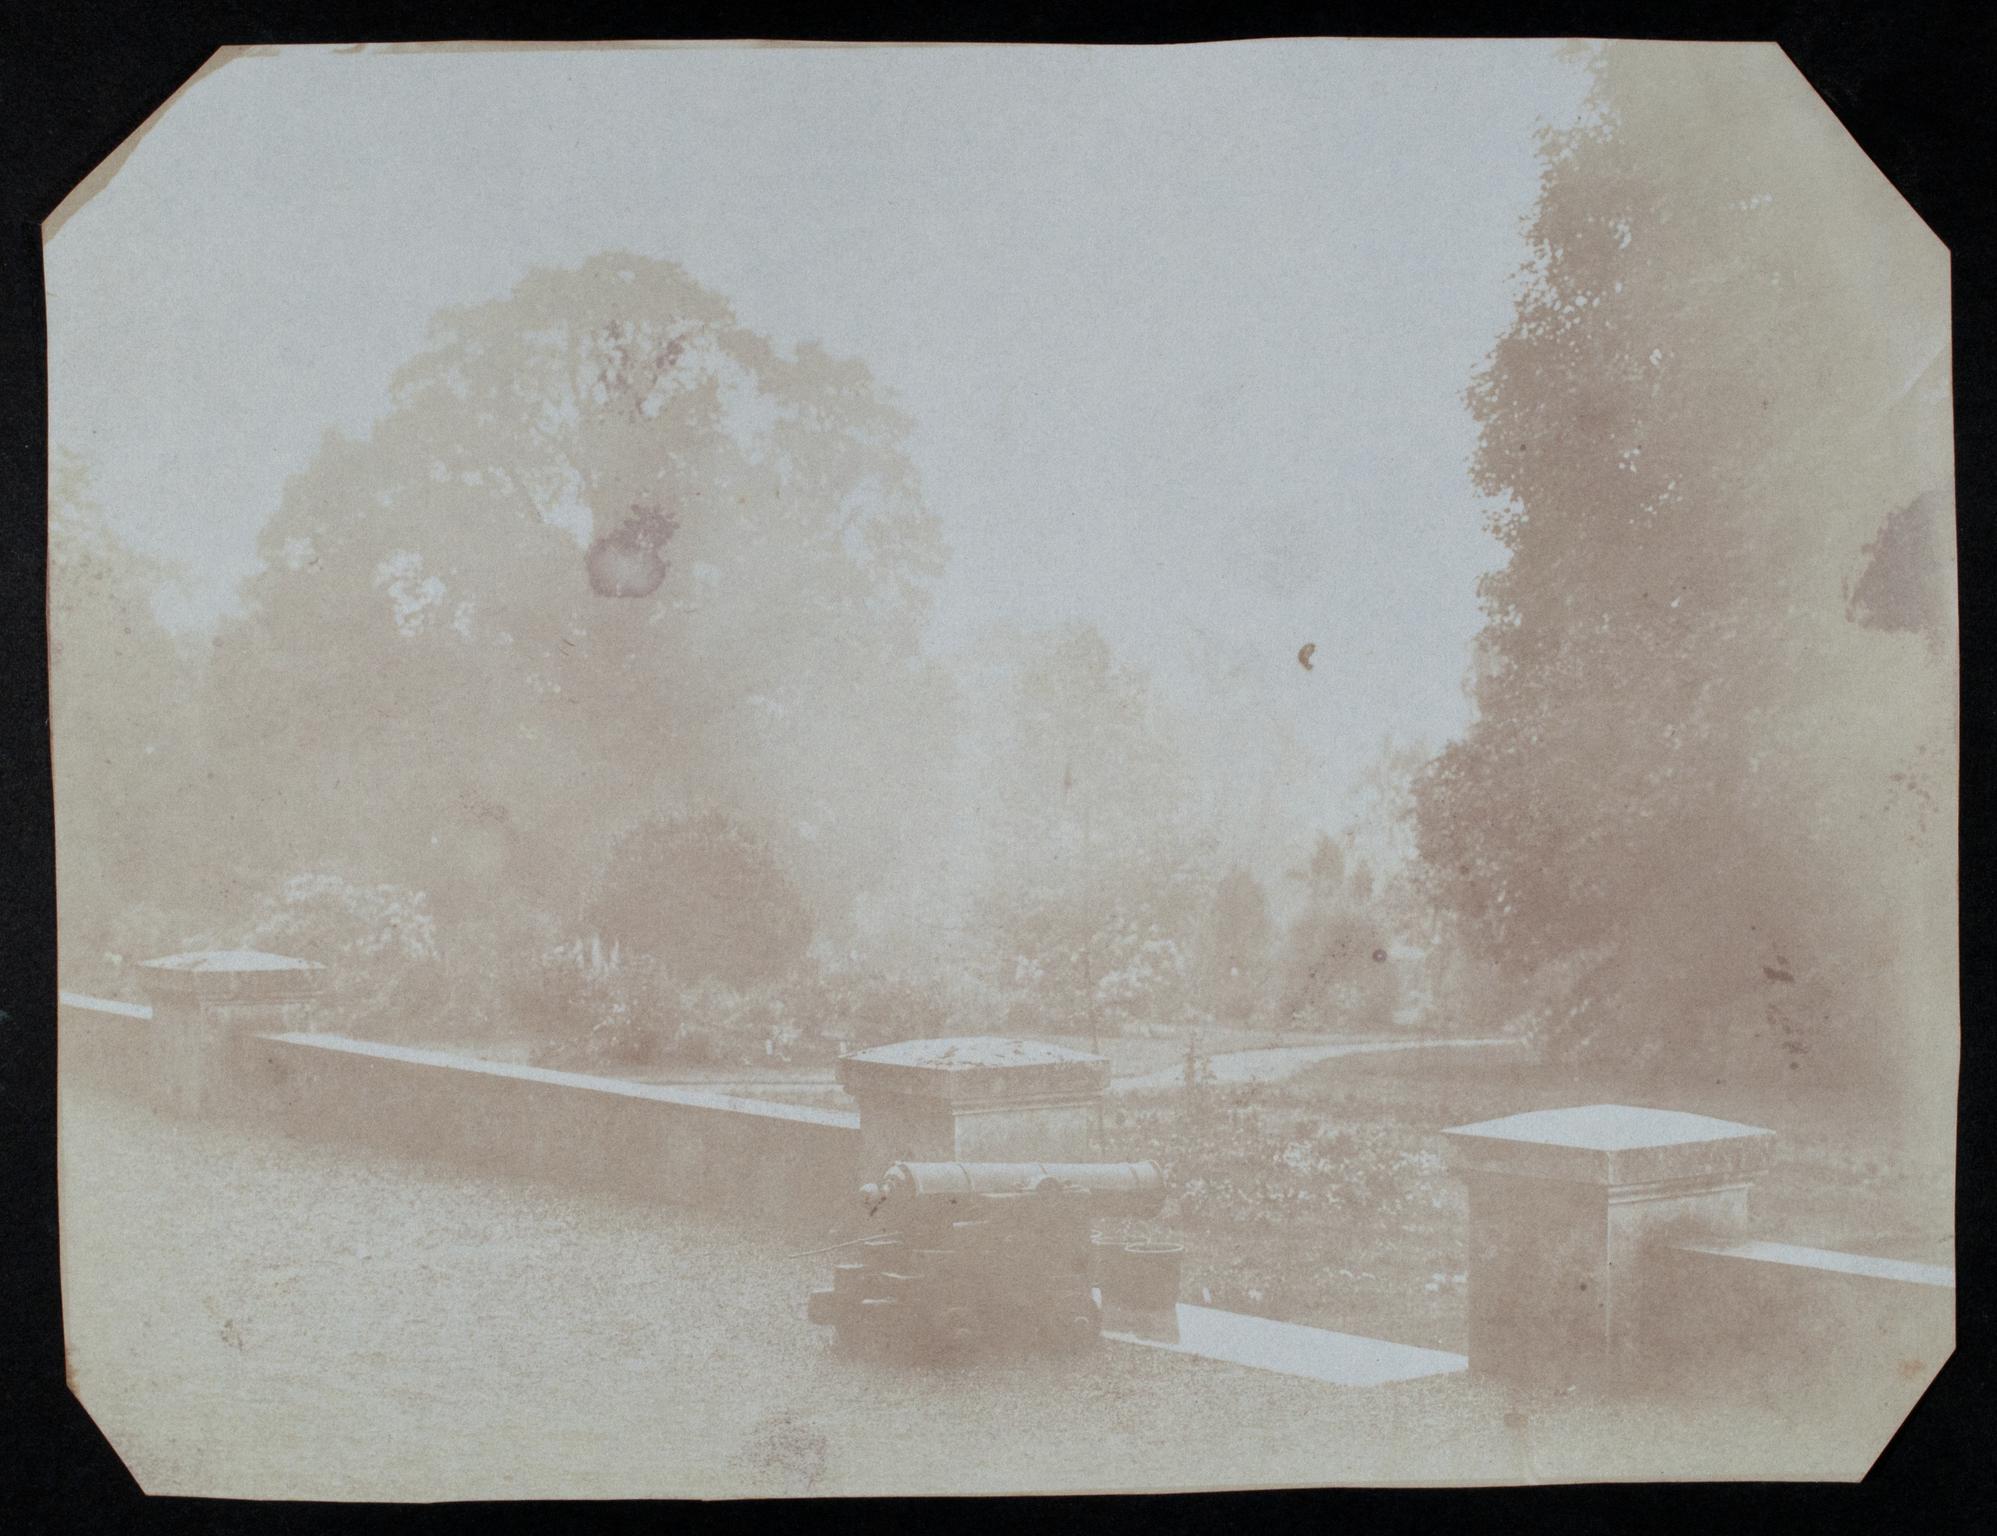 Cannon on terrace overlooking garden, photograph